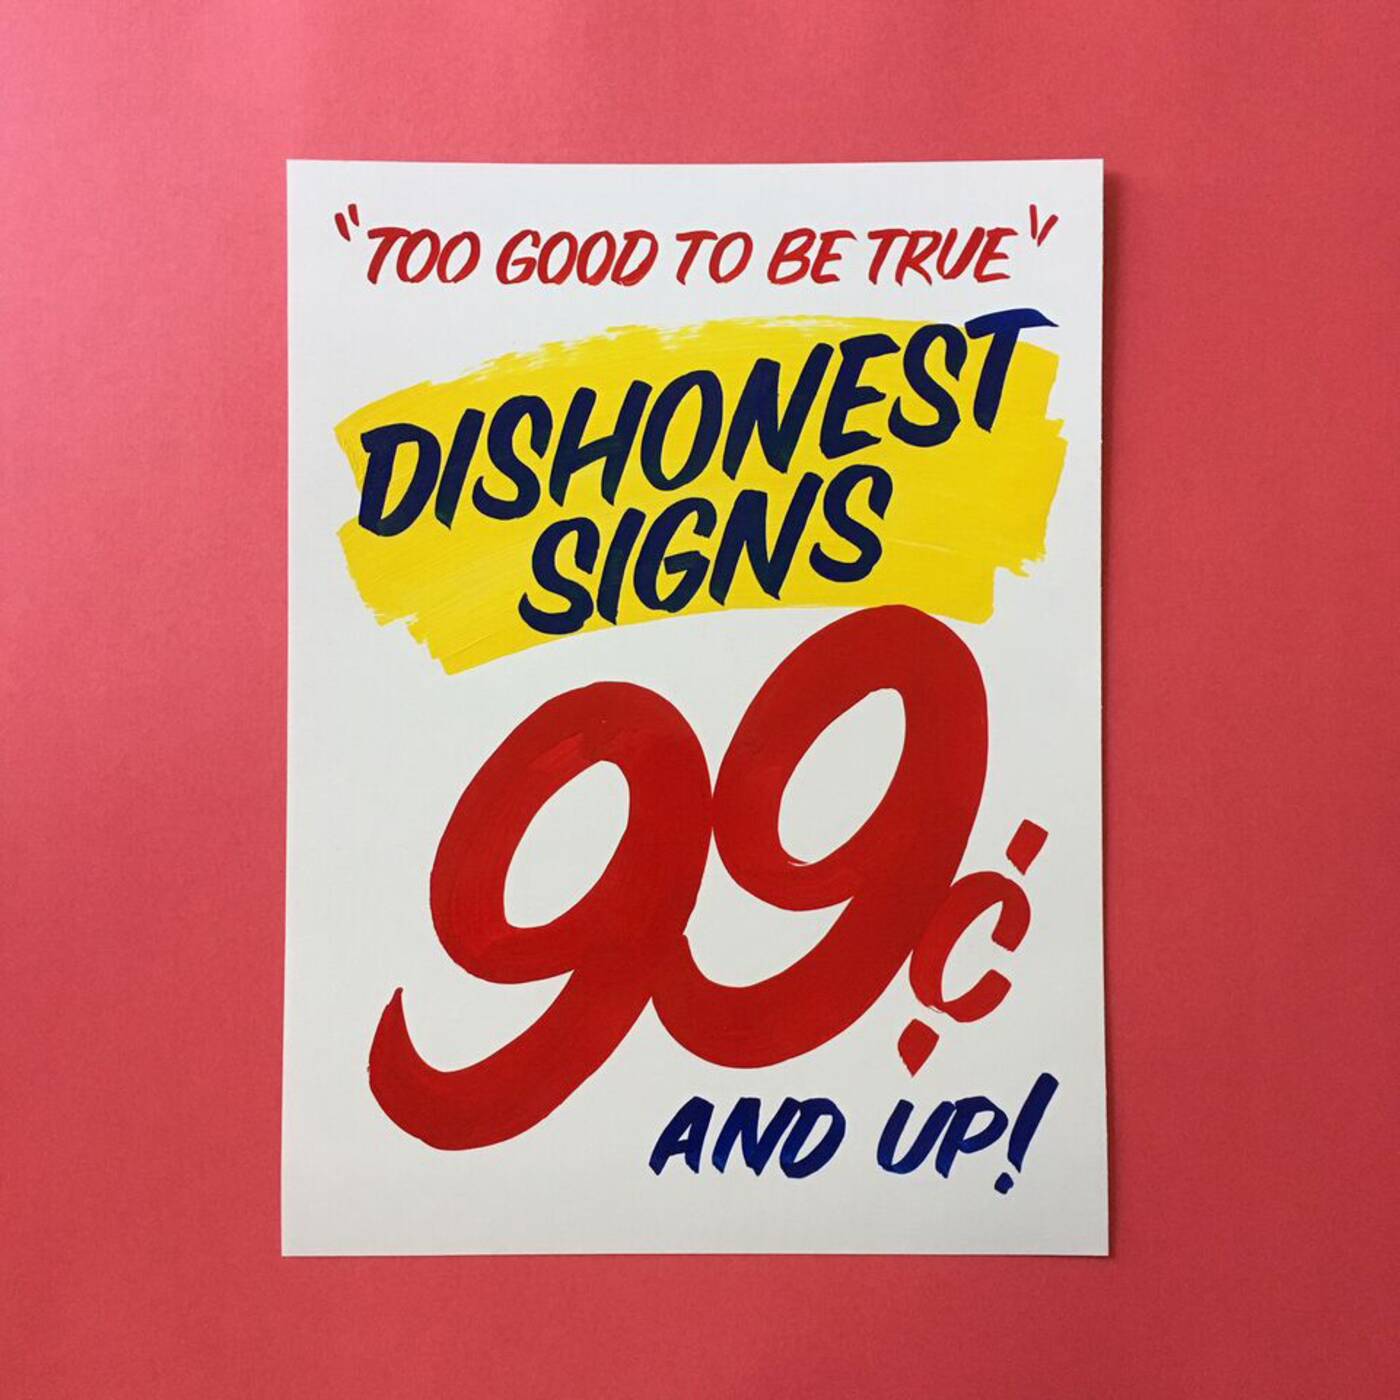 dishonest eds signs